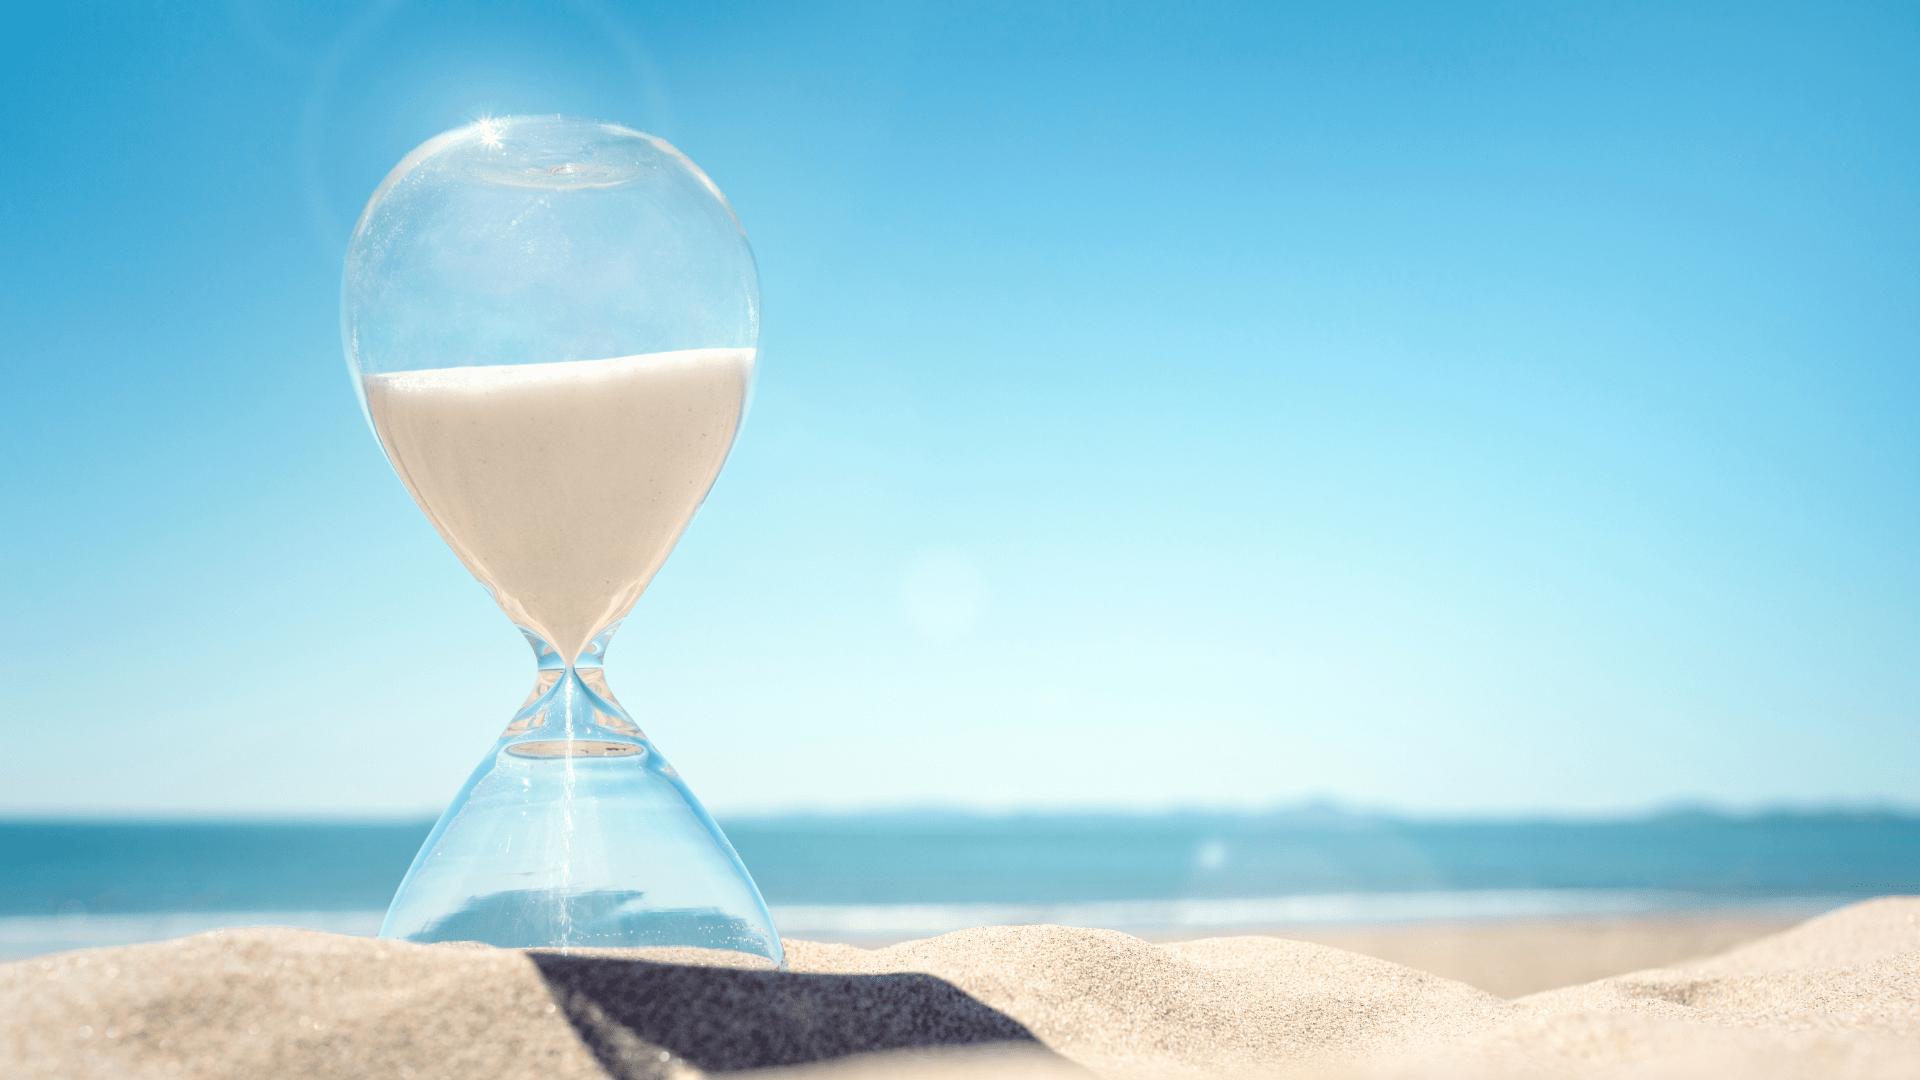 Hourglass on a sunny beach